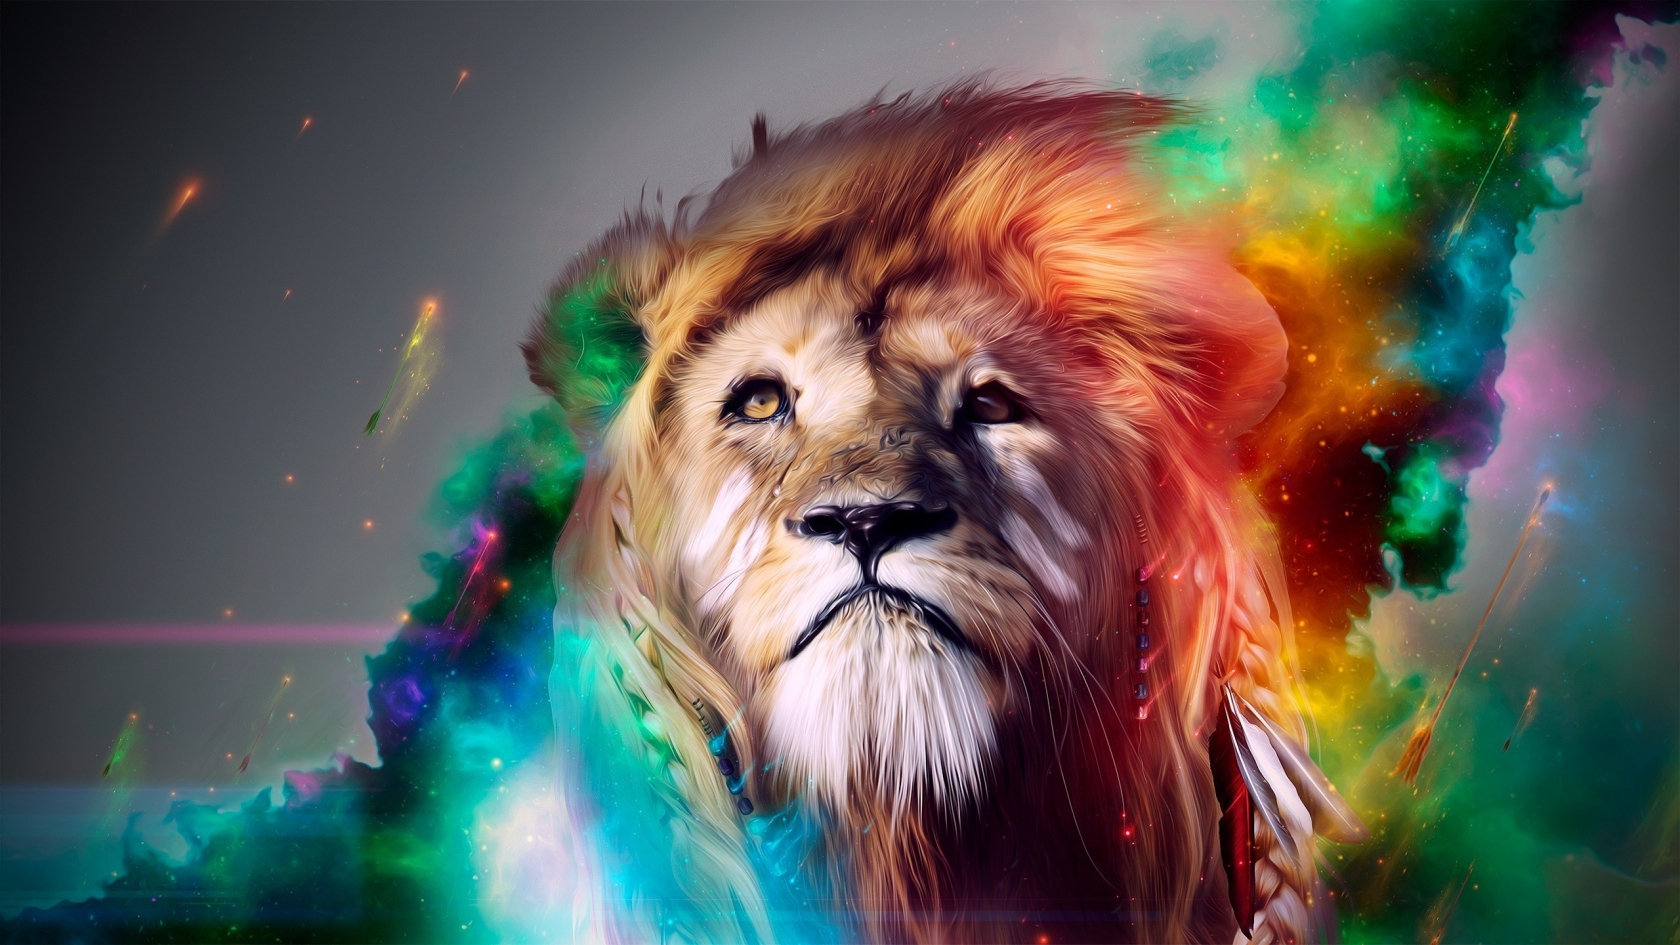 Rainbow Lion for 1680 x 945 HDTV resolution